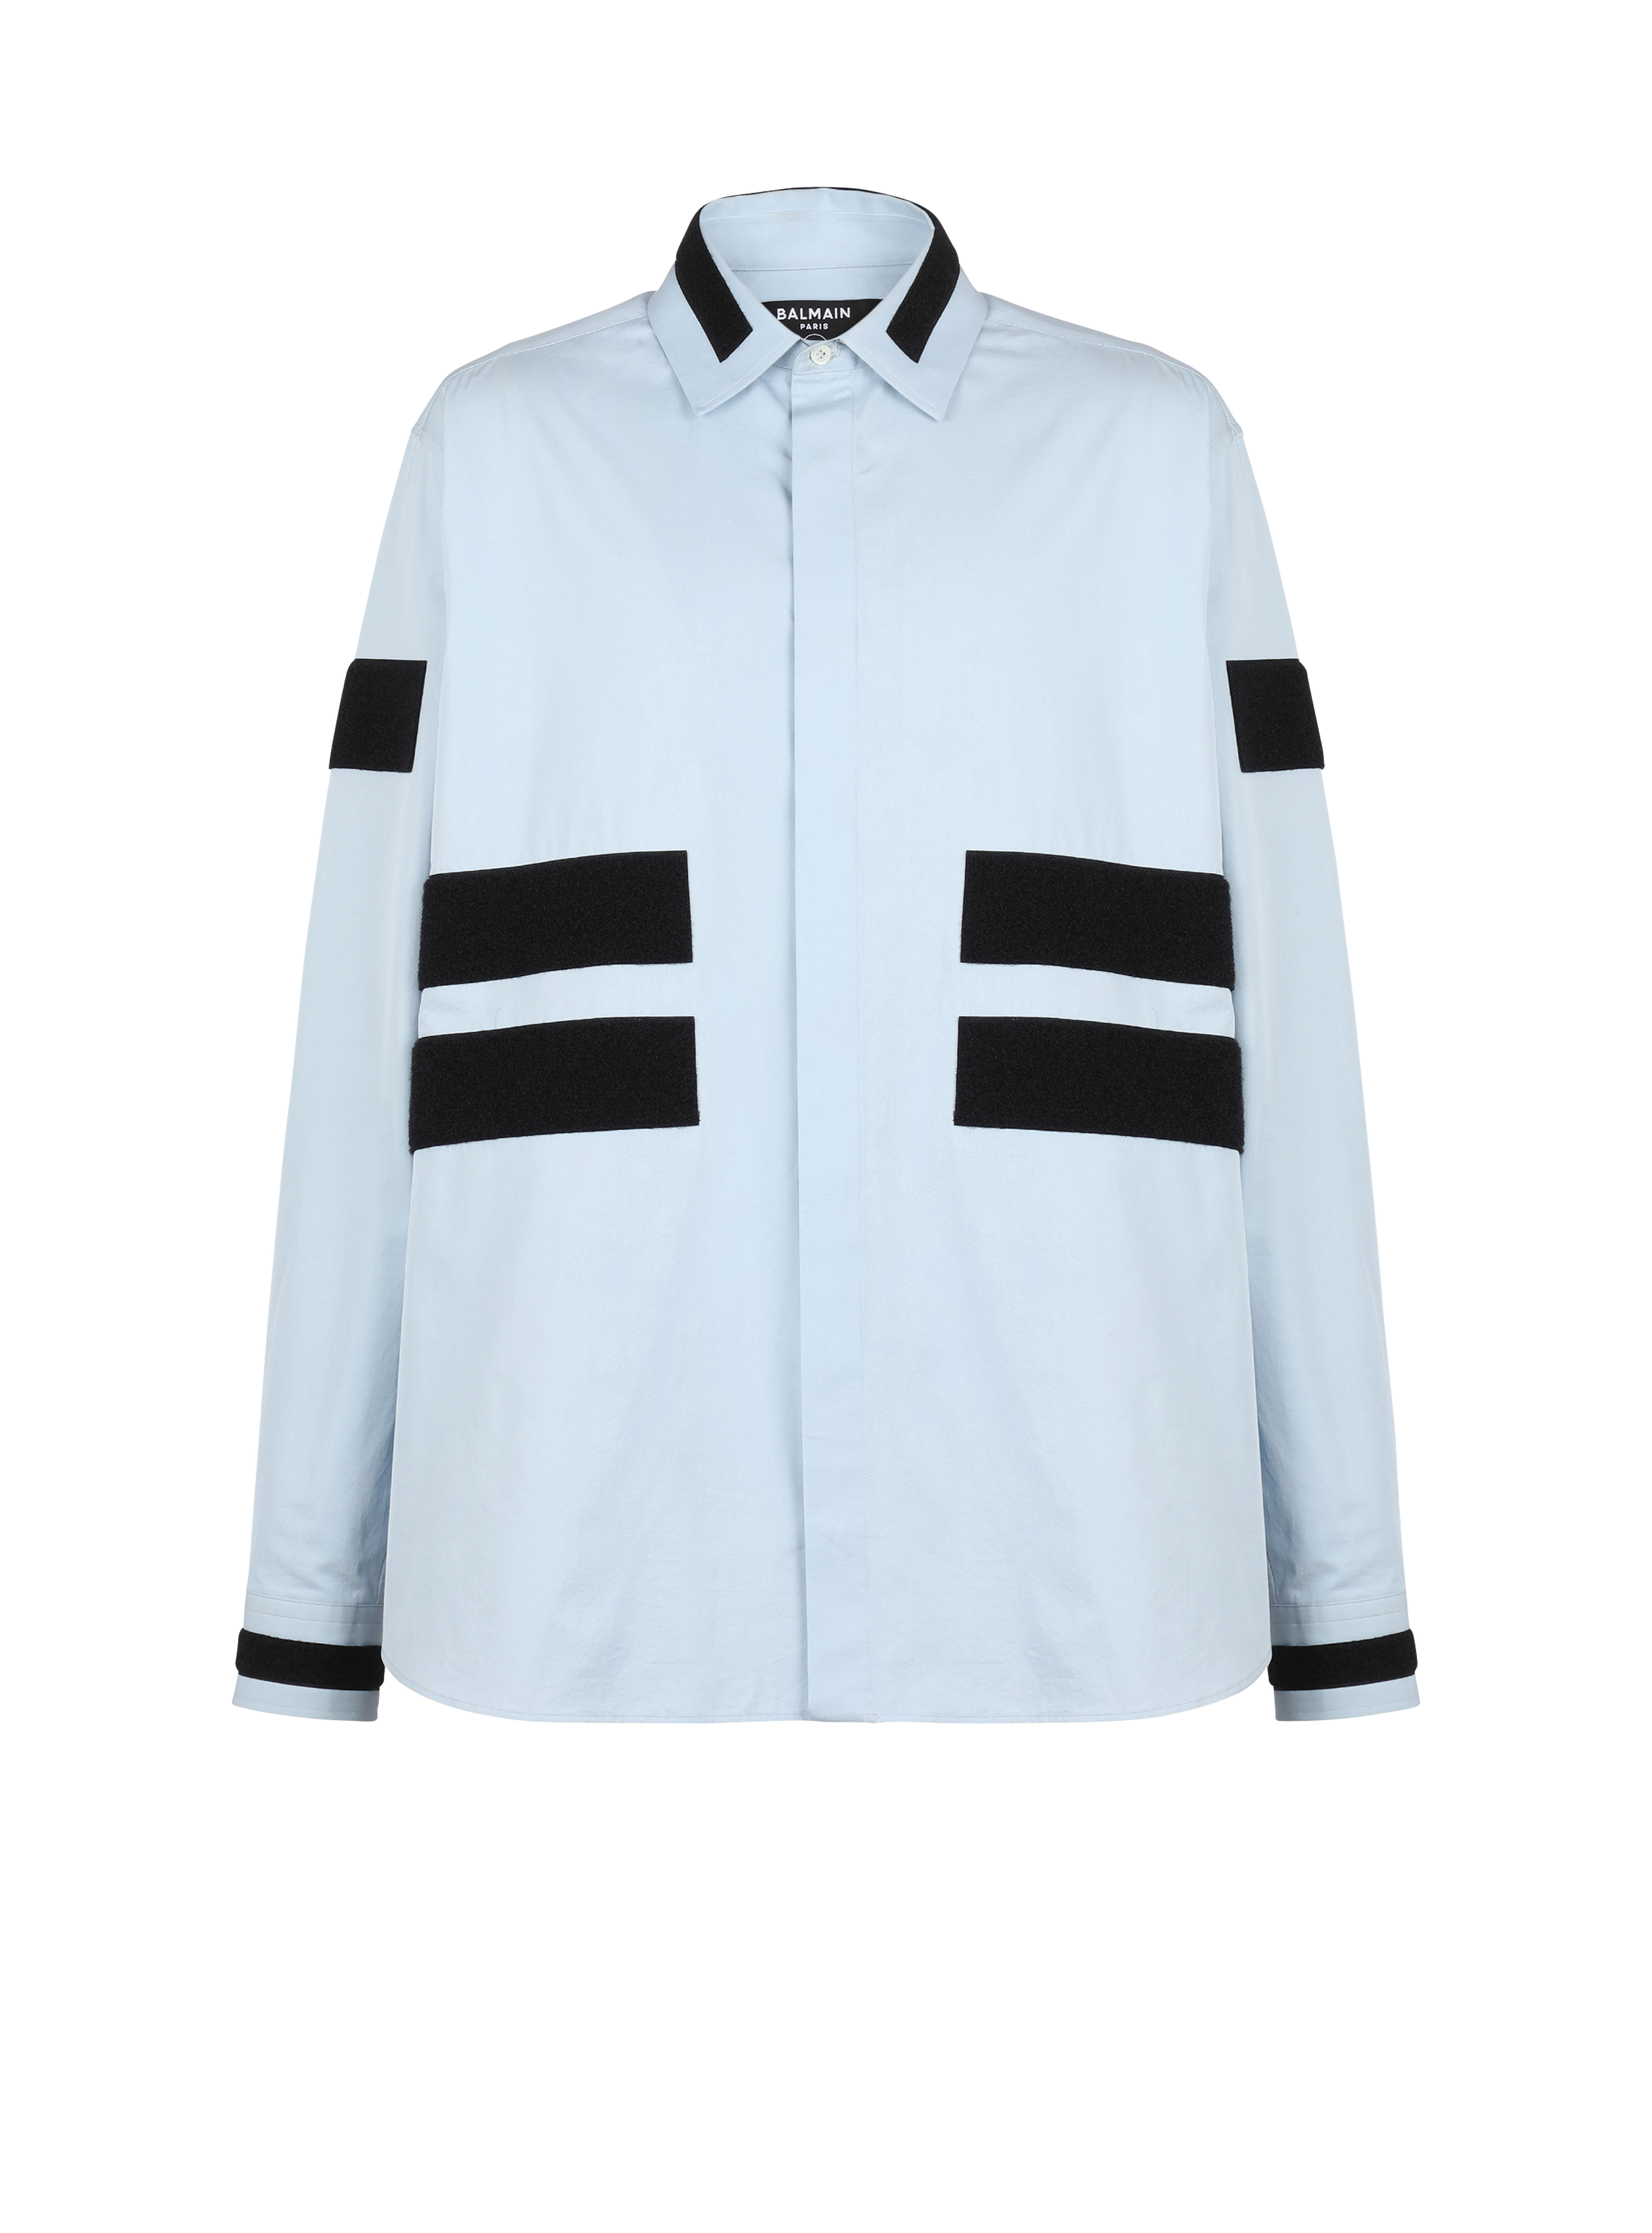 Cotton shirt with velcro stripes, blue